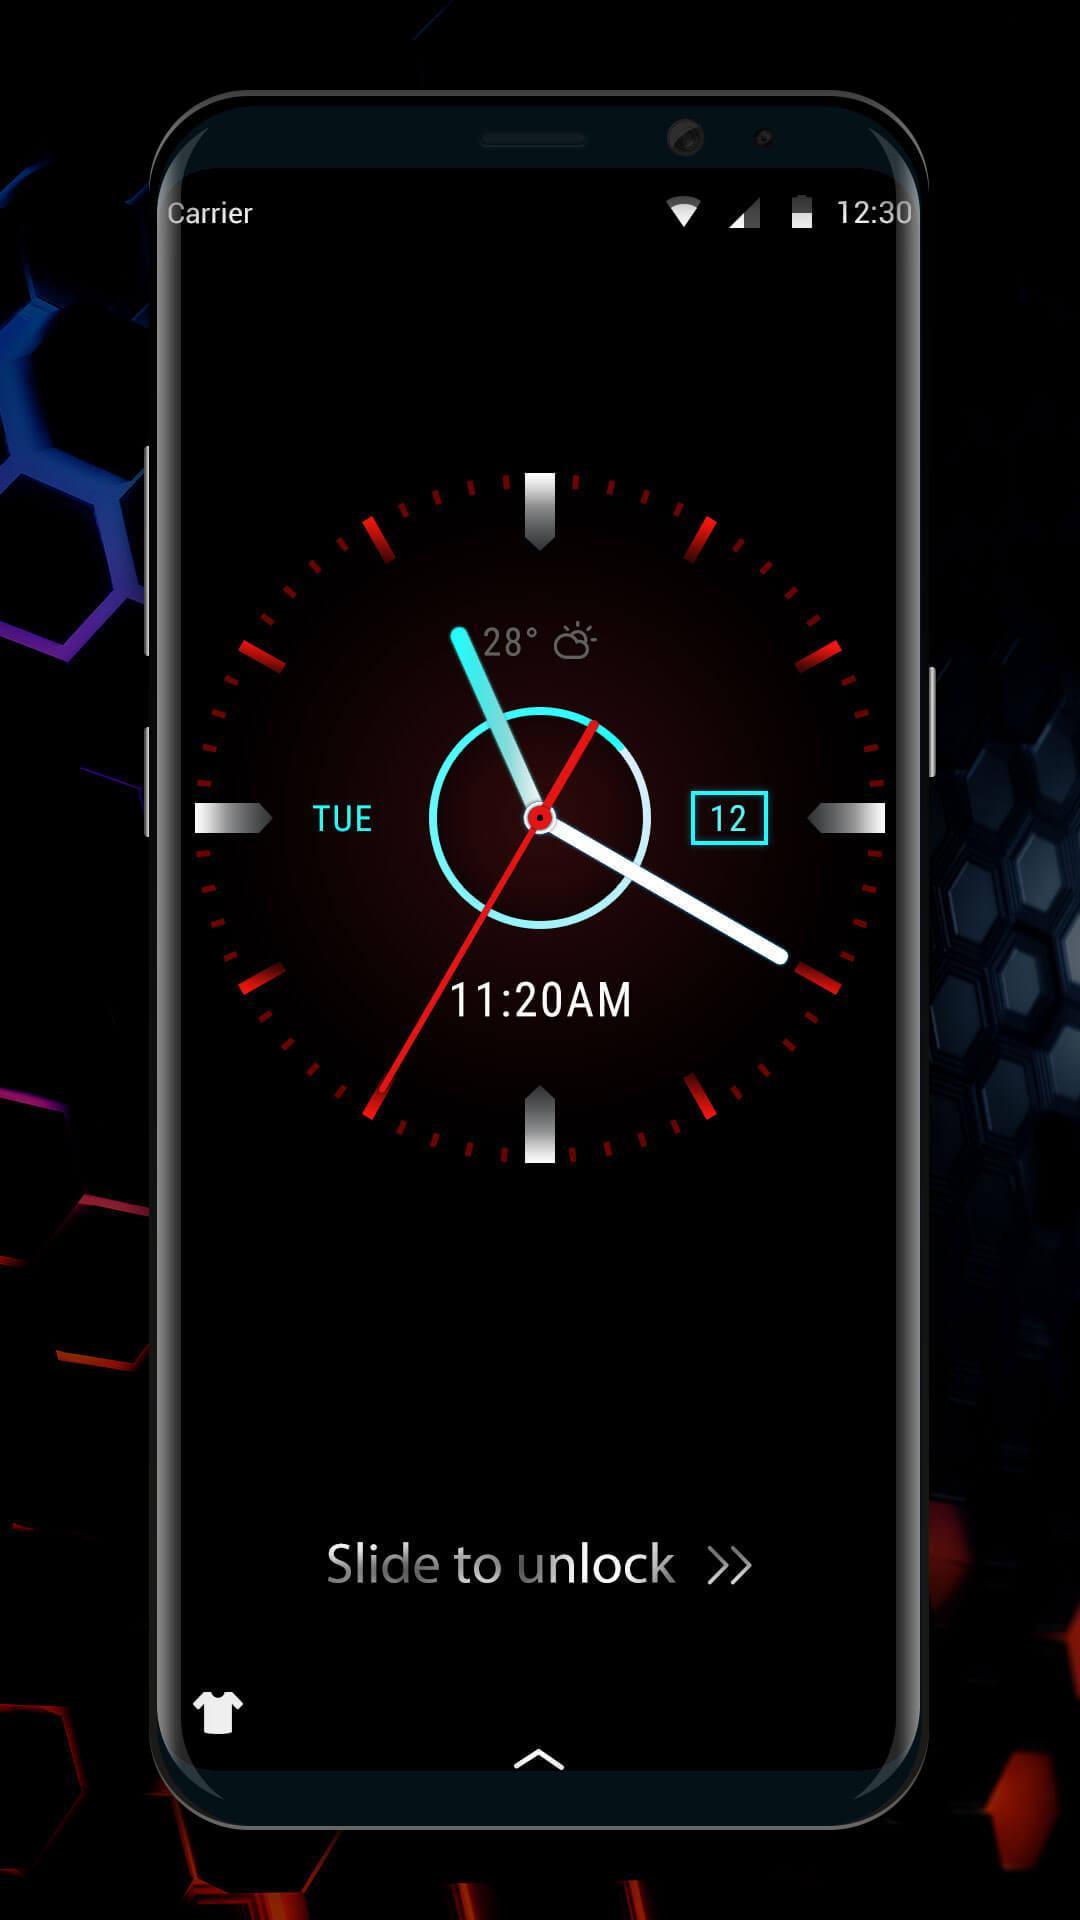 Бесплатные часы на андроид без рекламы. Часы на Honor 20s. Экран смартфона с часами. Часы на экран блокировки смартфона. Часы для телефона андроид.